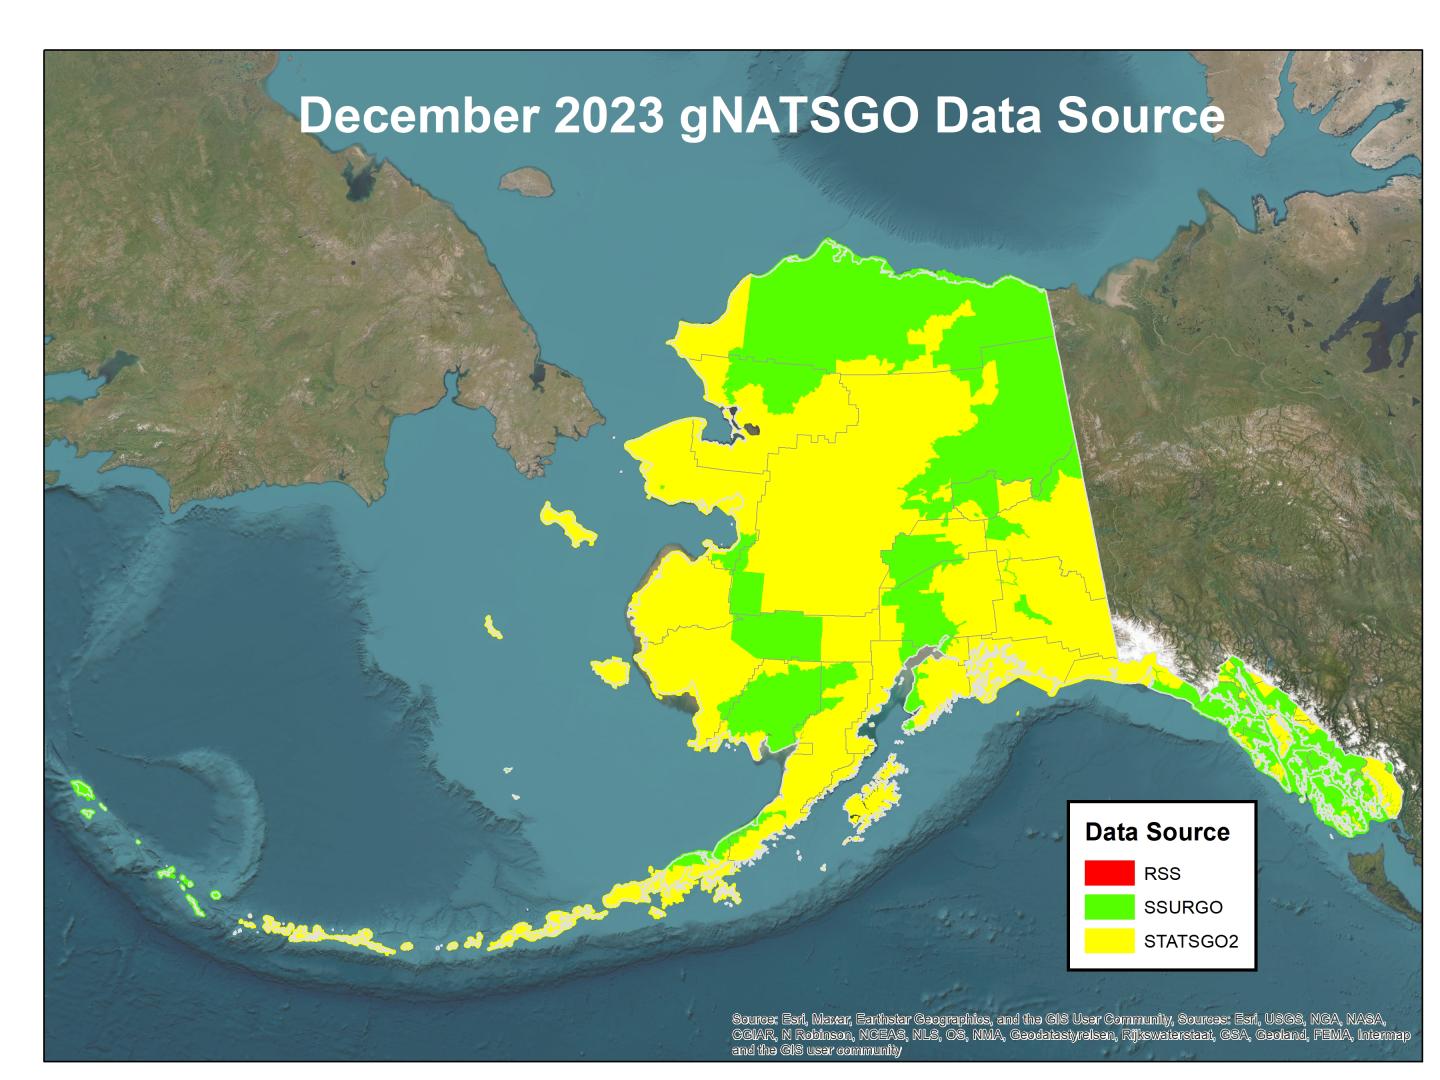 Figure 2 shows the distribution of SSURGO, STATSGO2, and RSSs in gNATSGO for Alaska.